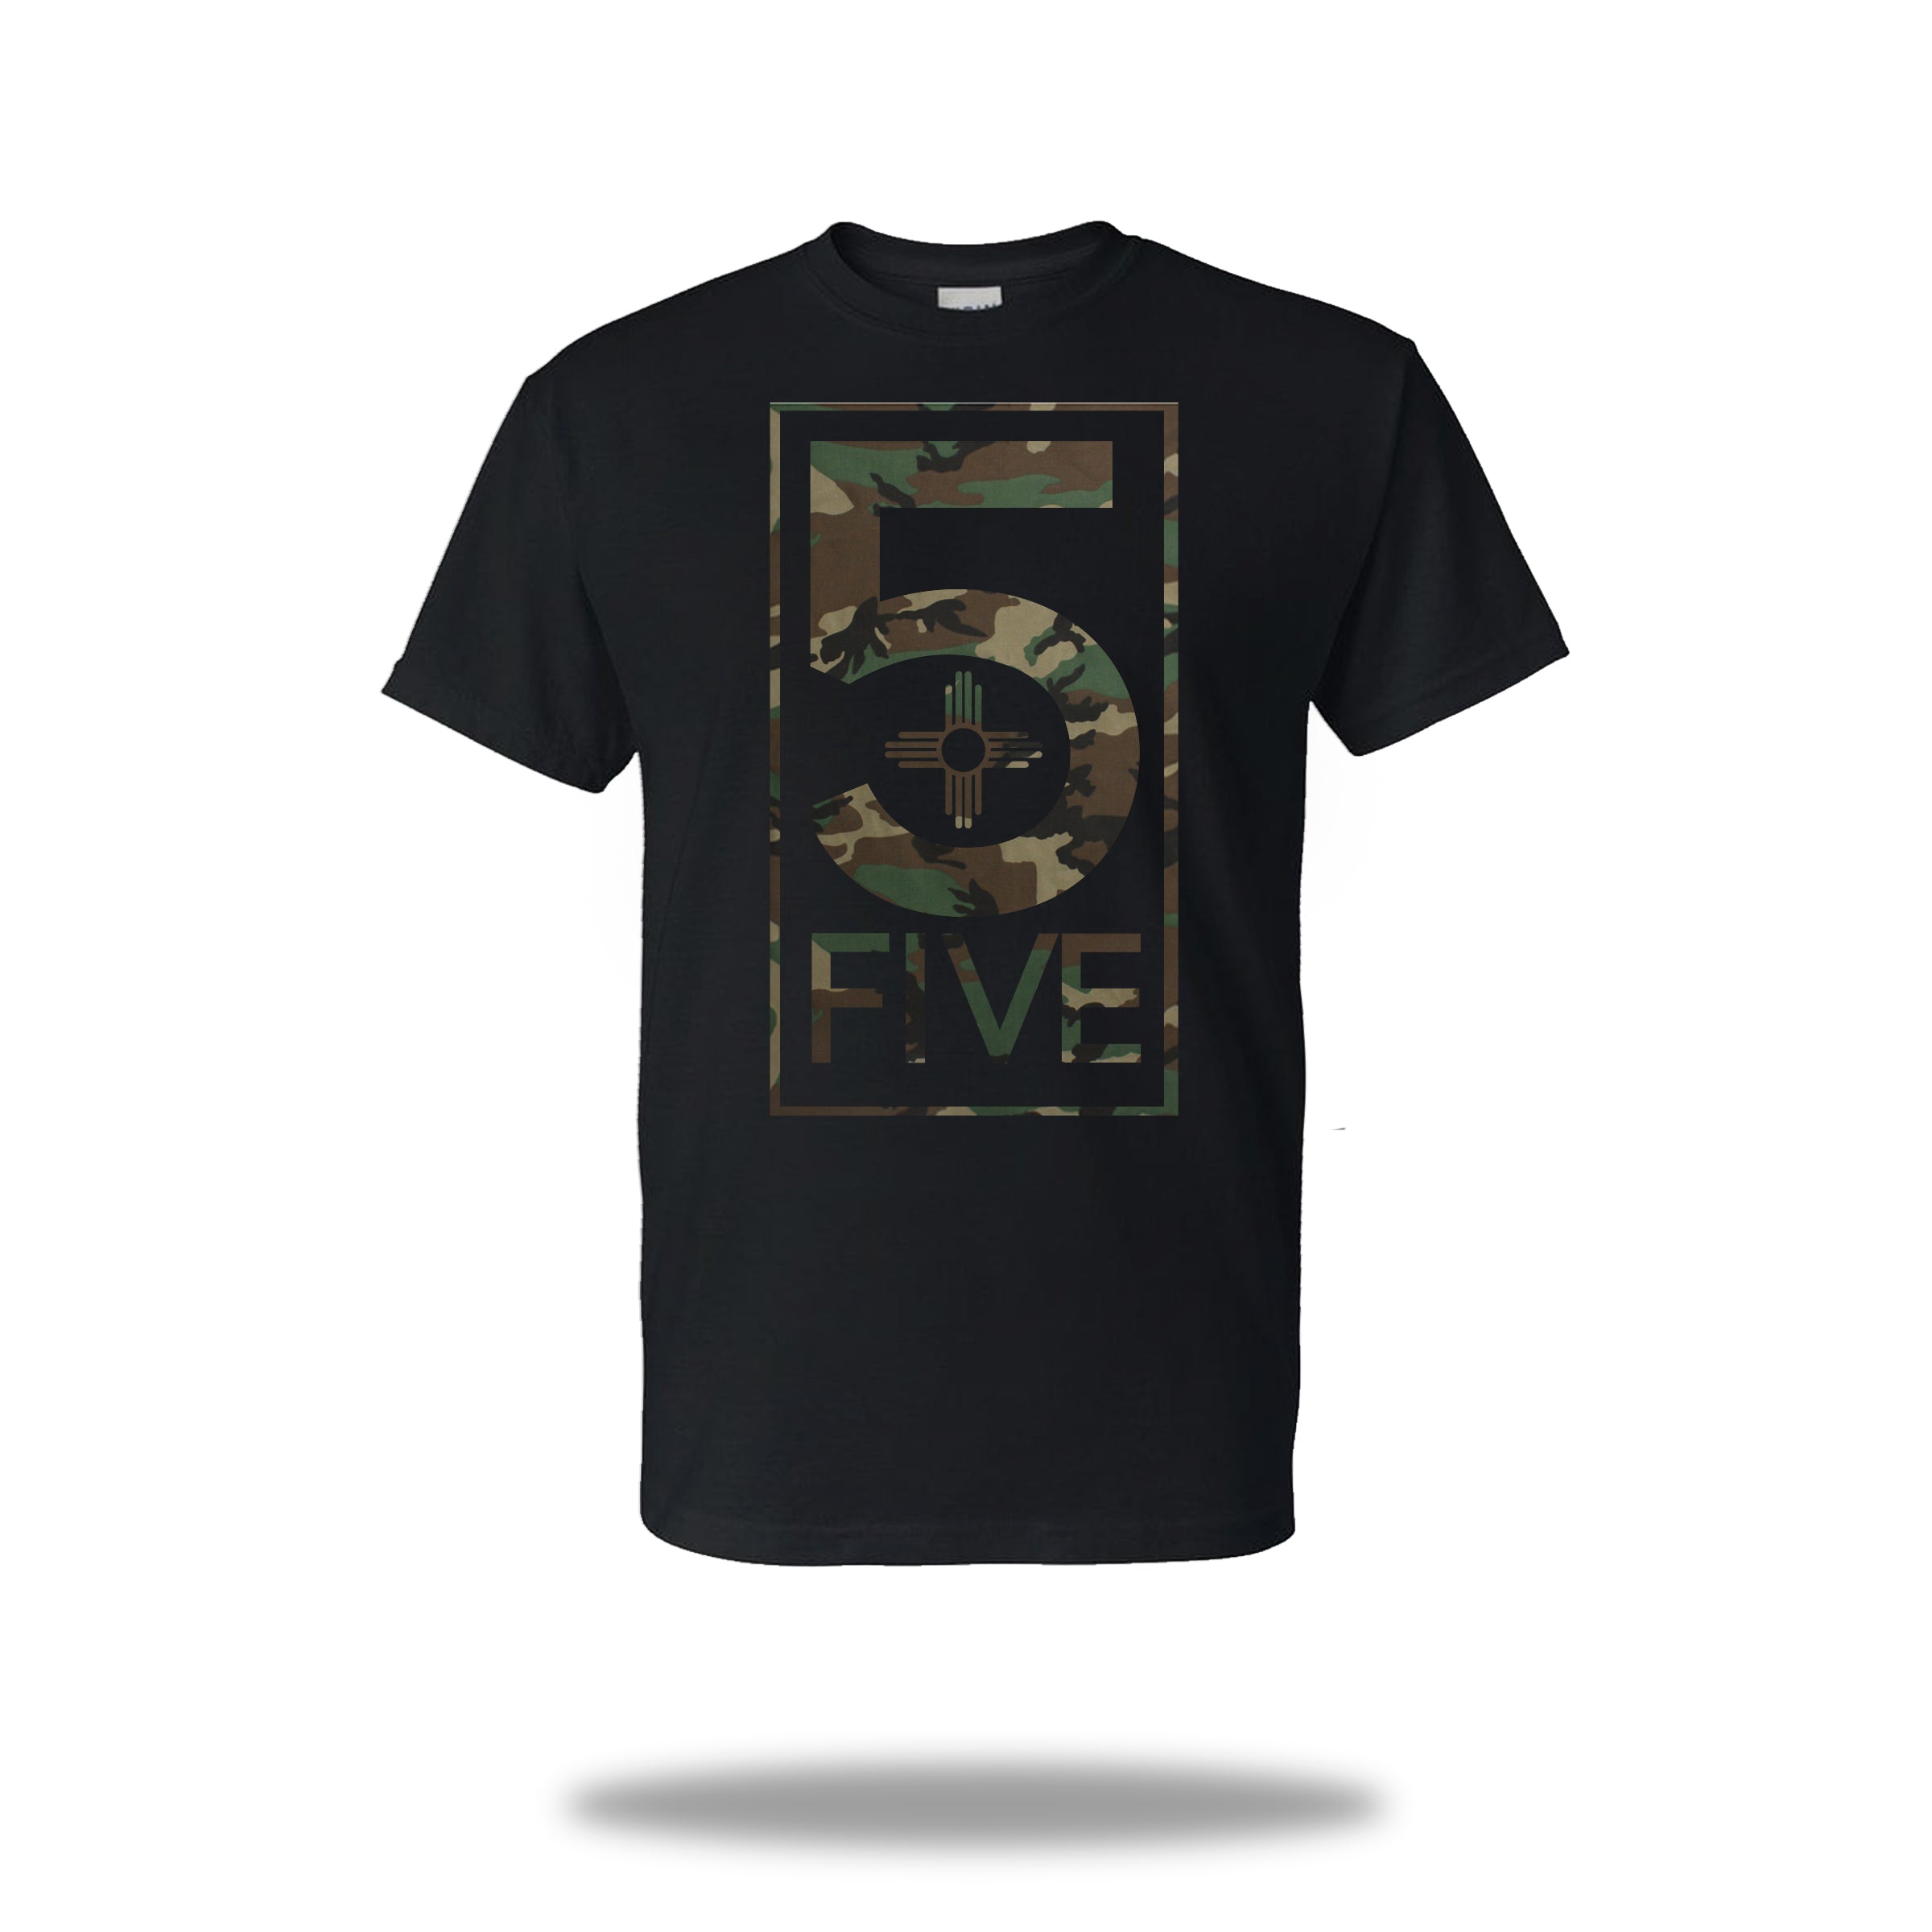 5-0 FIVE T-Shirt